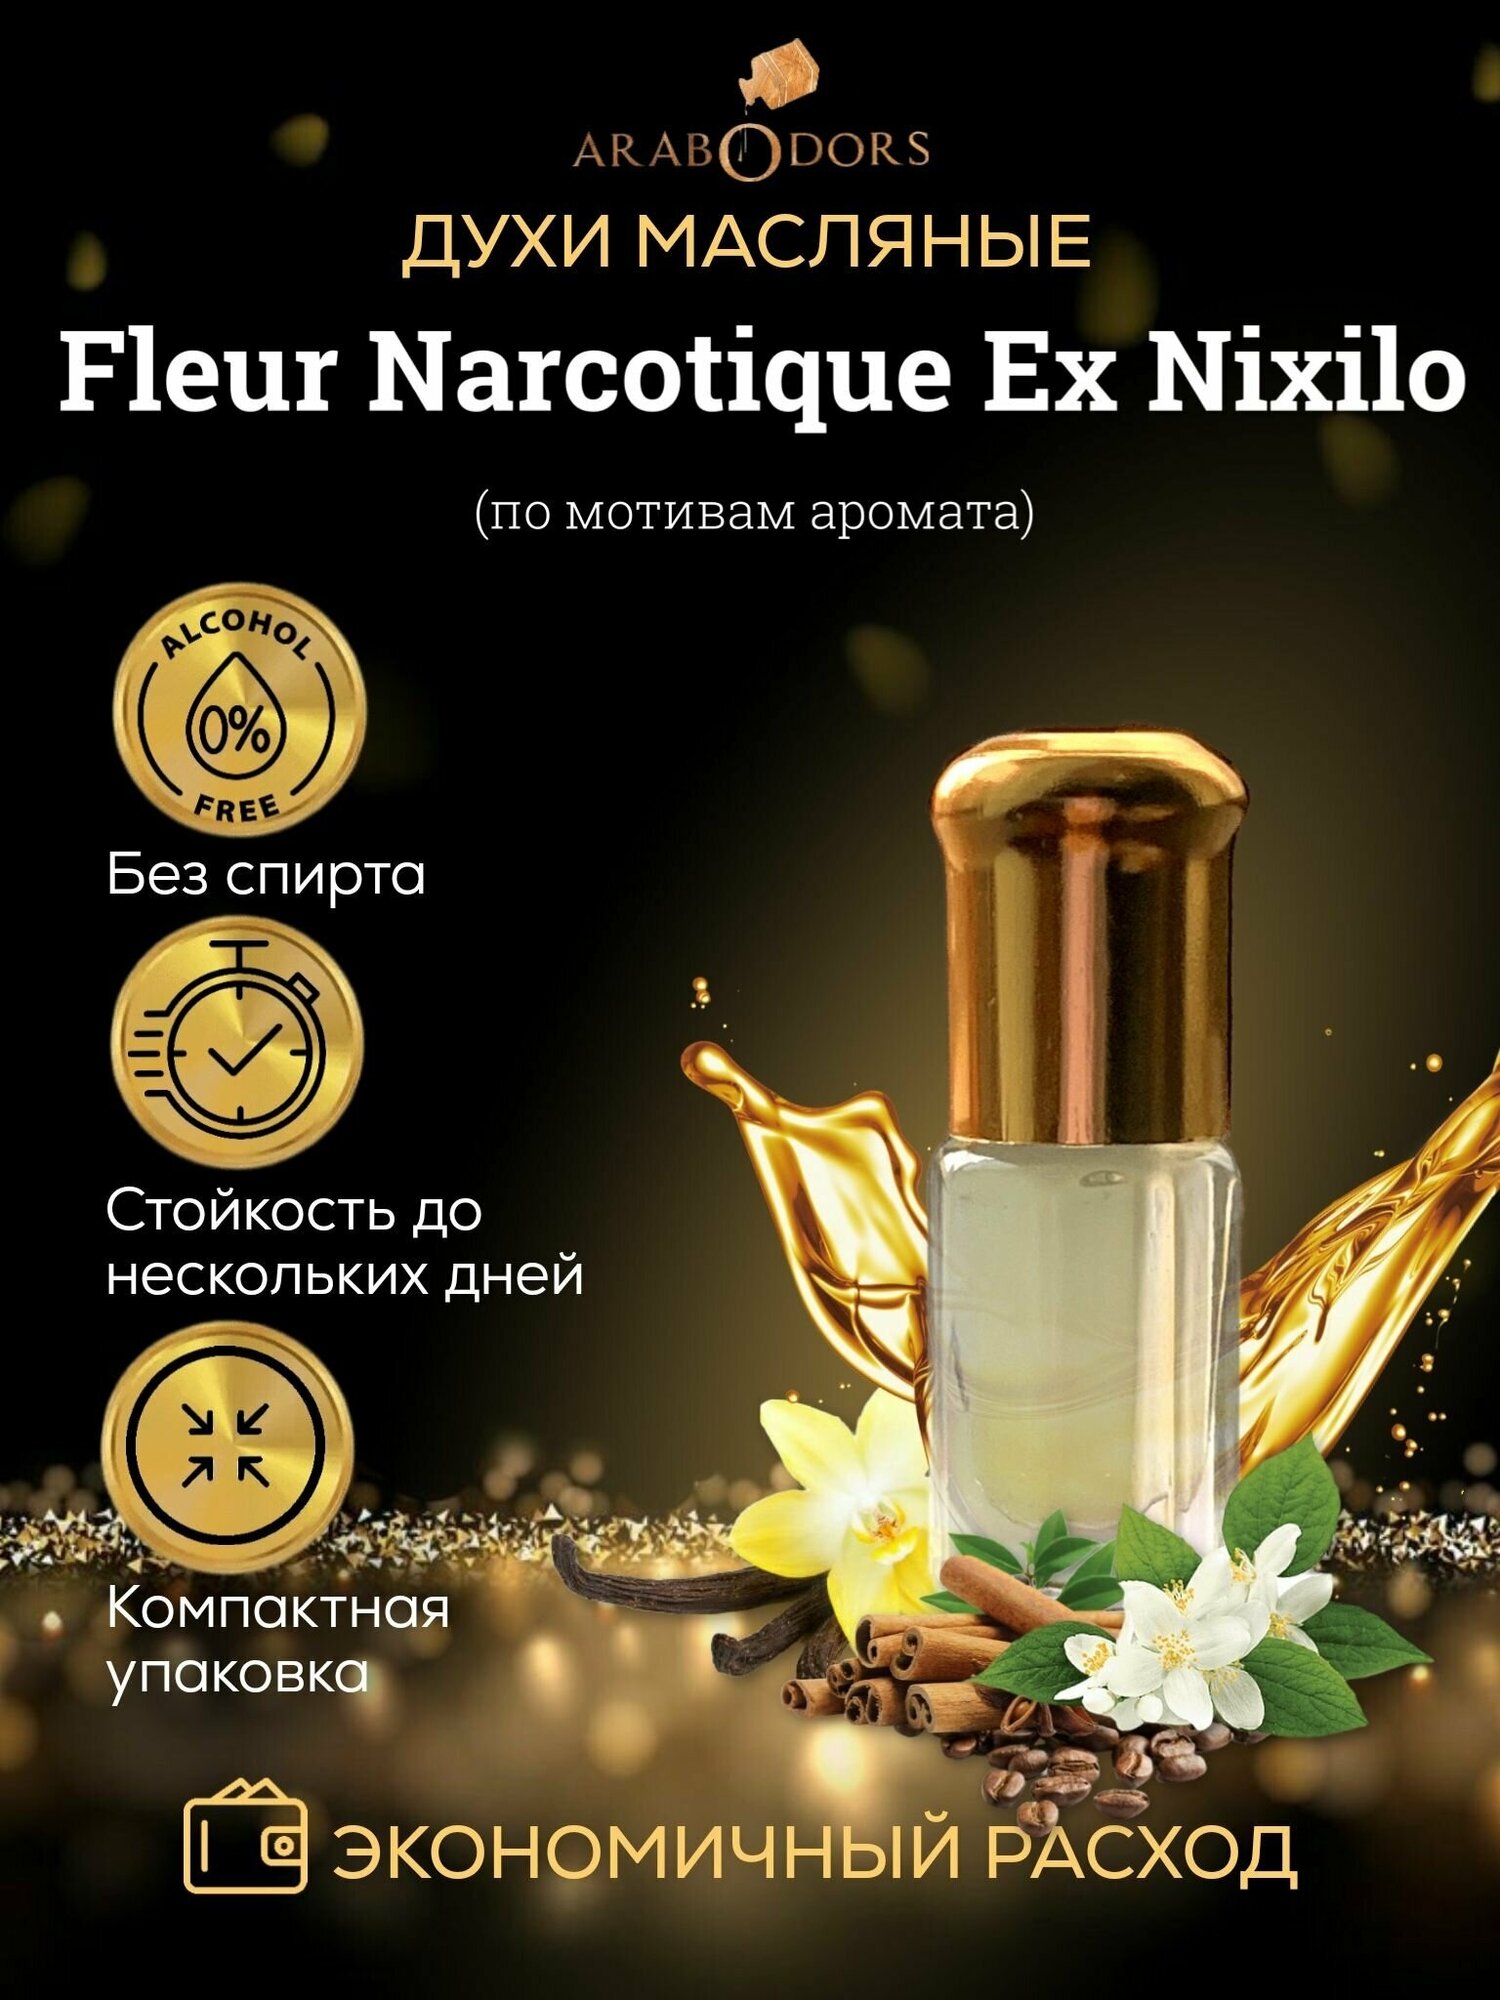 Arab Odors Fleur Narcotique масляные духи без спирта 3 мл